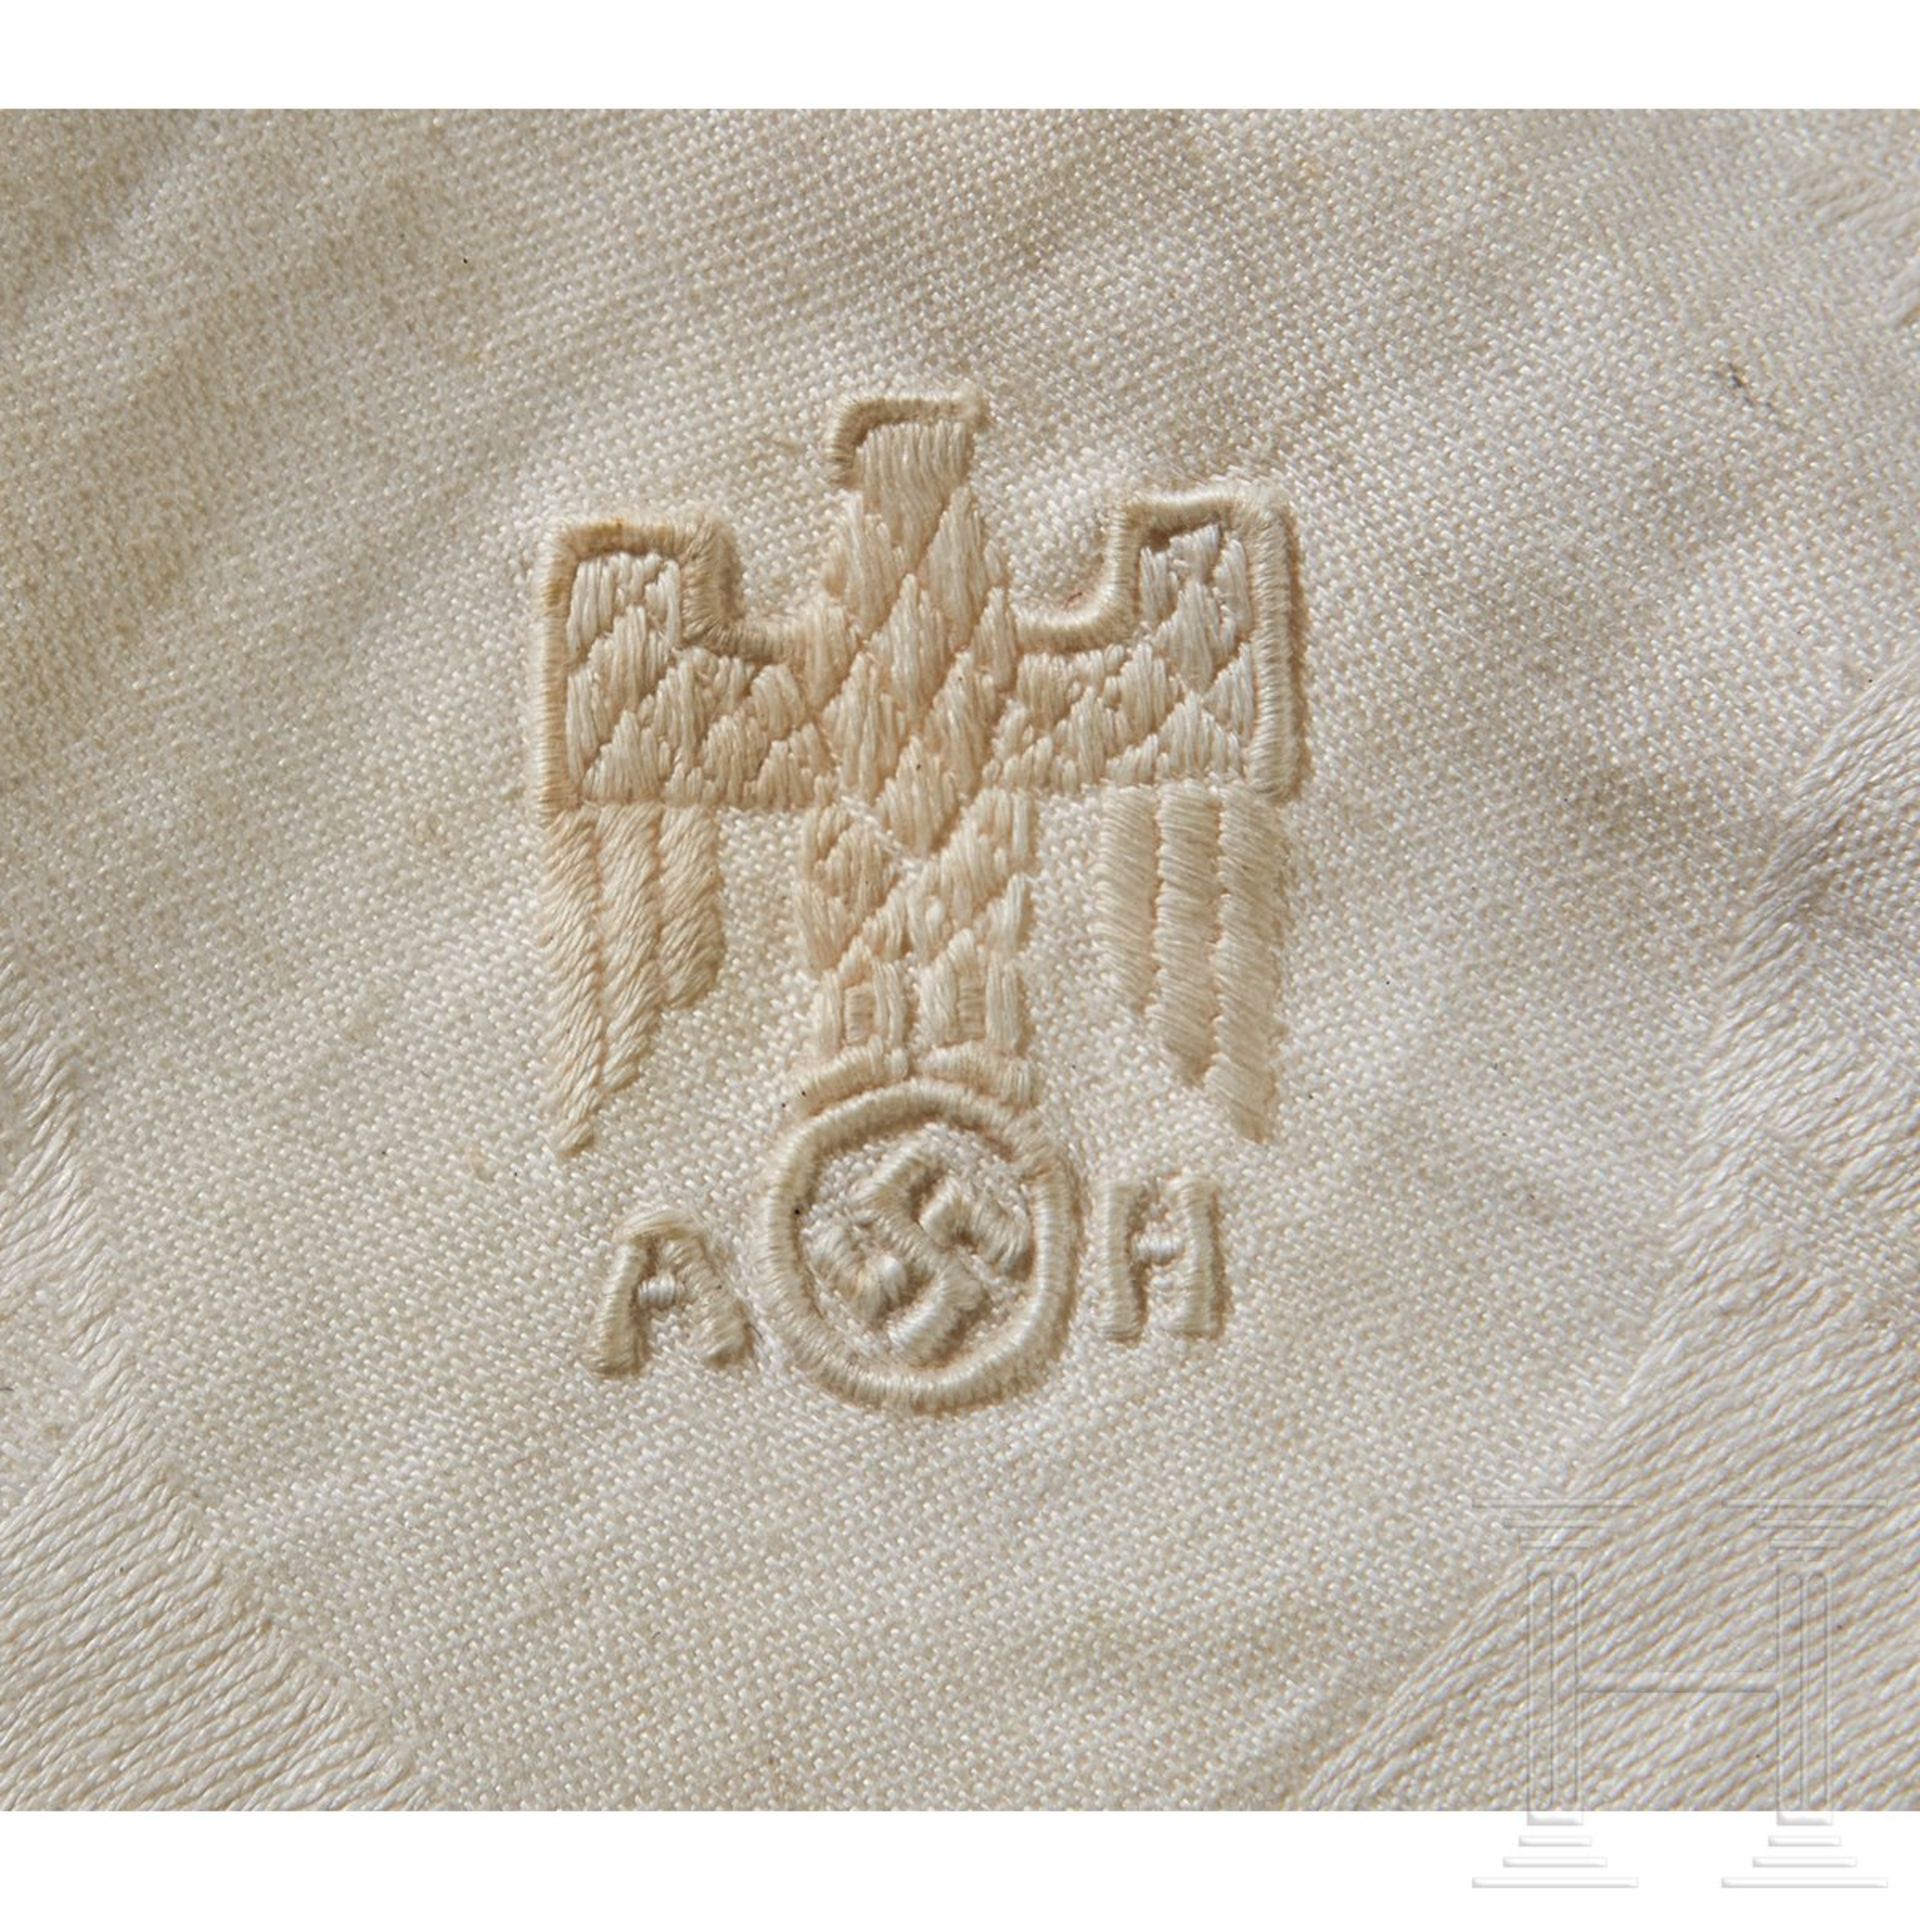 <de>Adolf Hitler – a Napkin from his Formal Personal Table Service<br>White color cloth linen napkin - Bild 3 aus 3